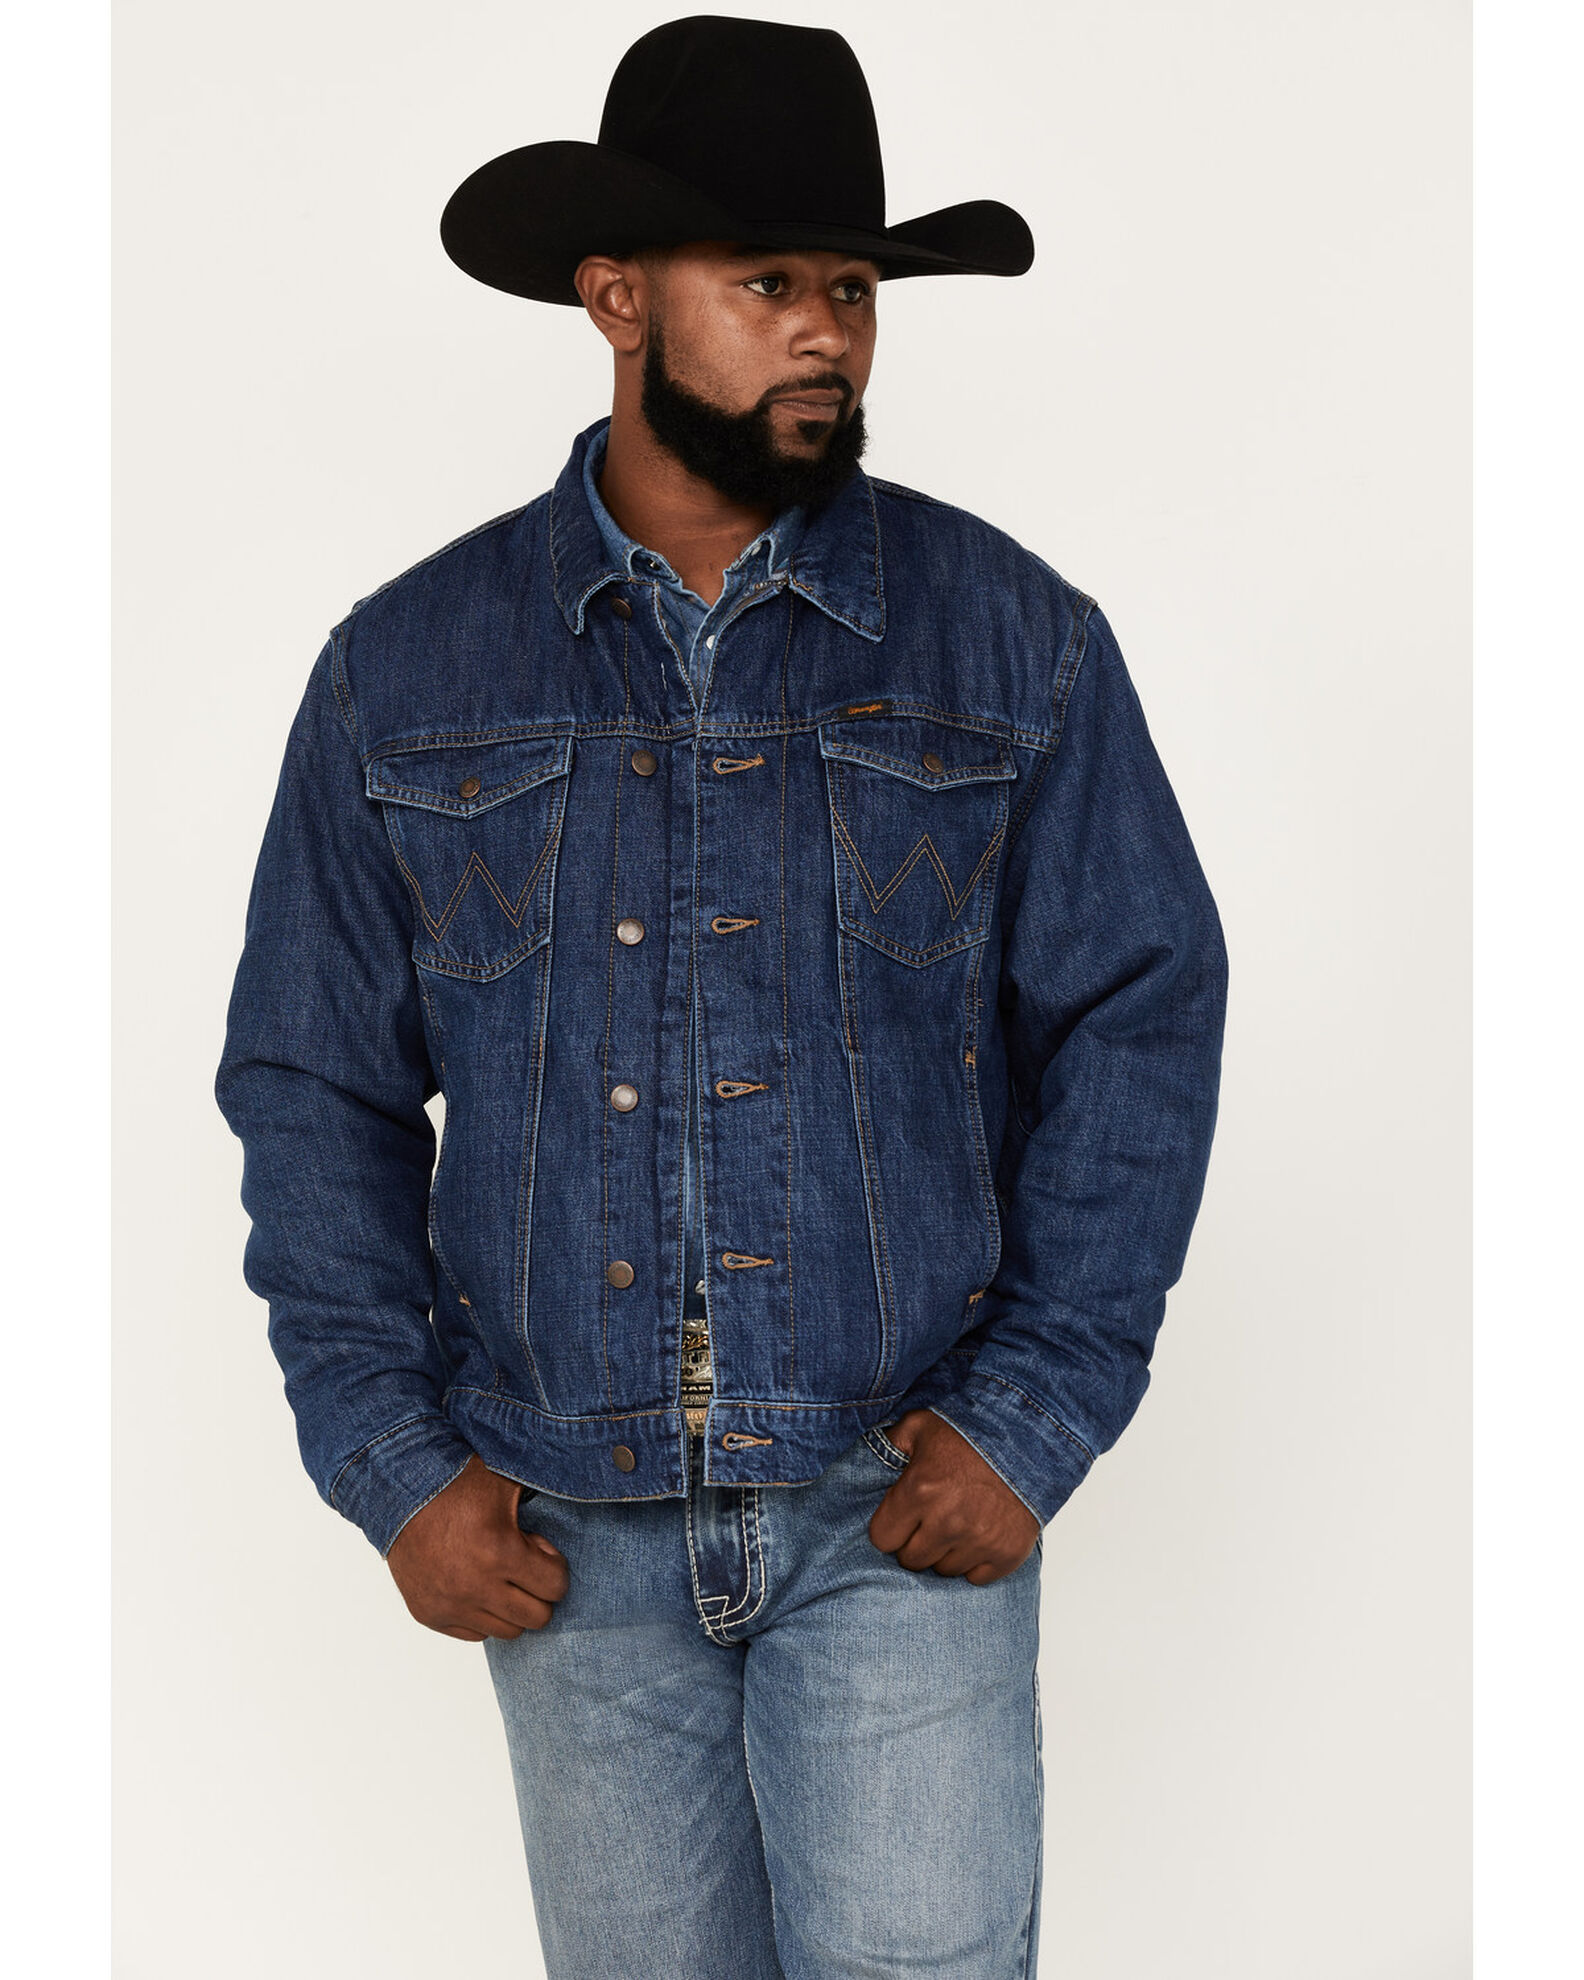 Introducir 59+ imagen boot barn wrangler jacket